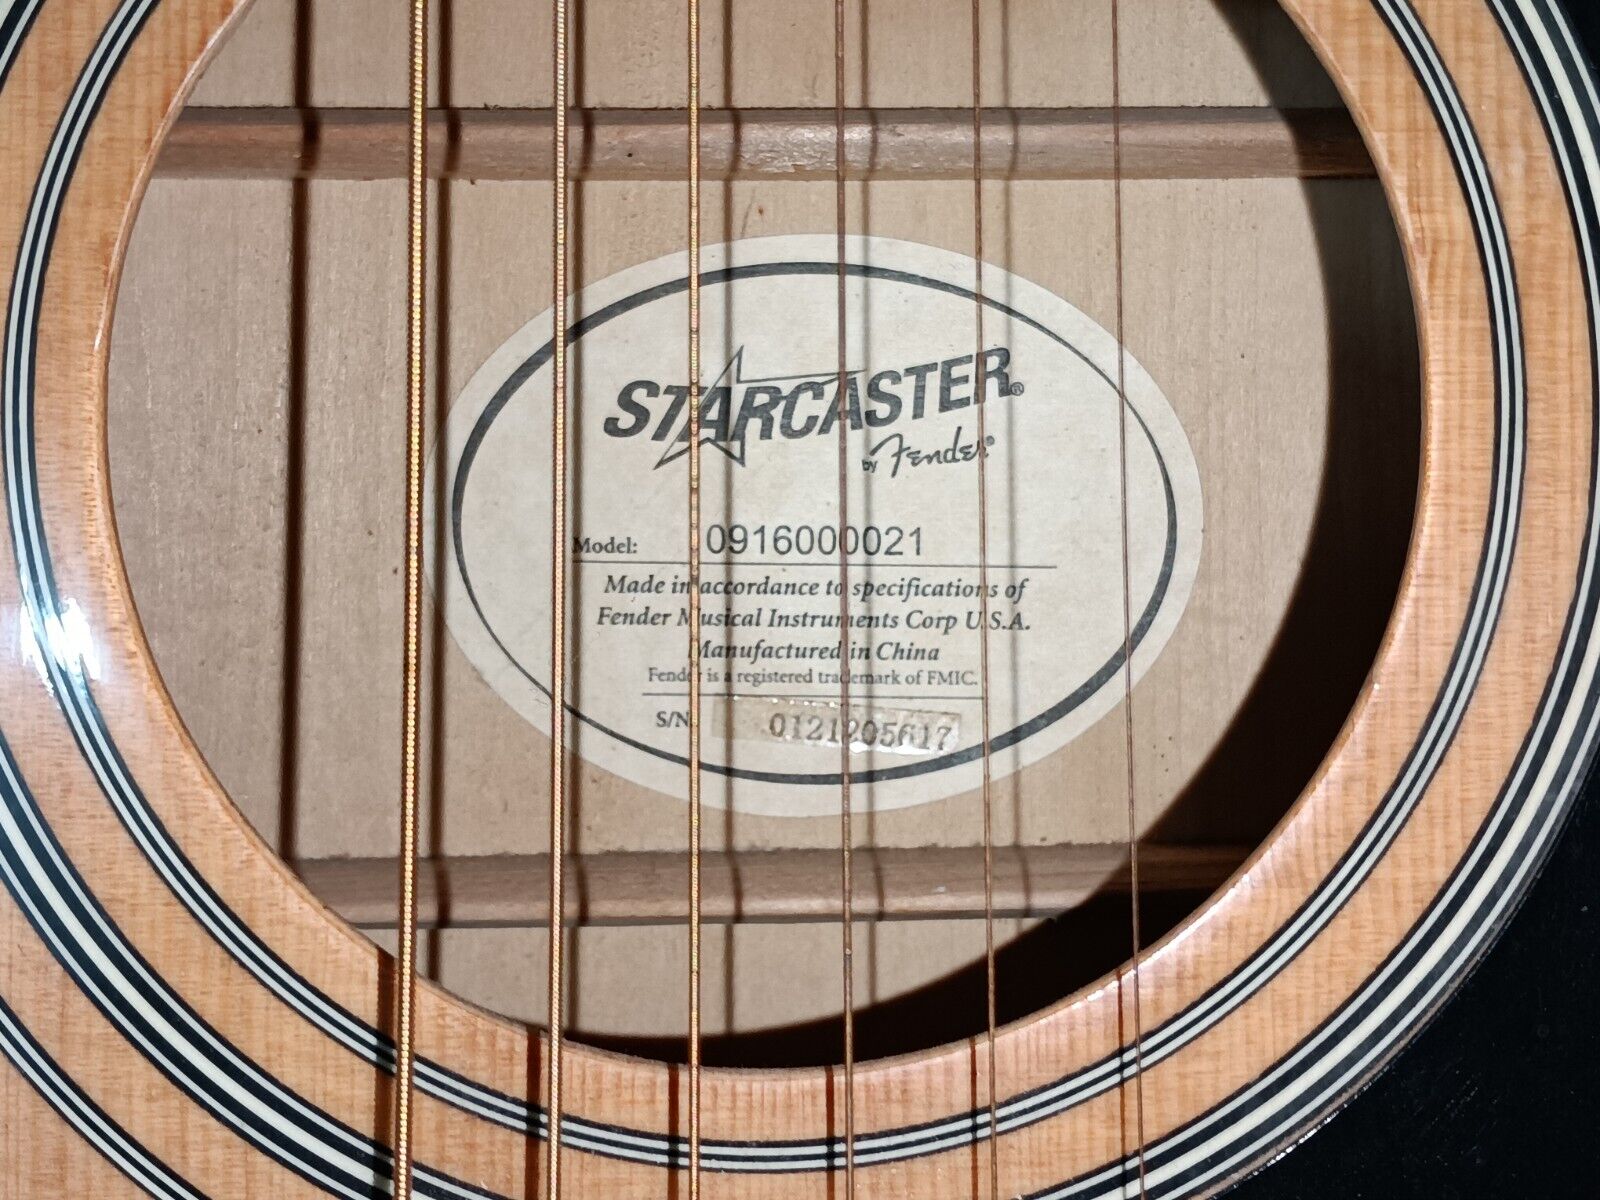 Fender Starcaster Acoustic Guitar (09160000021) 5